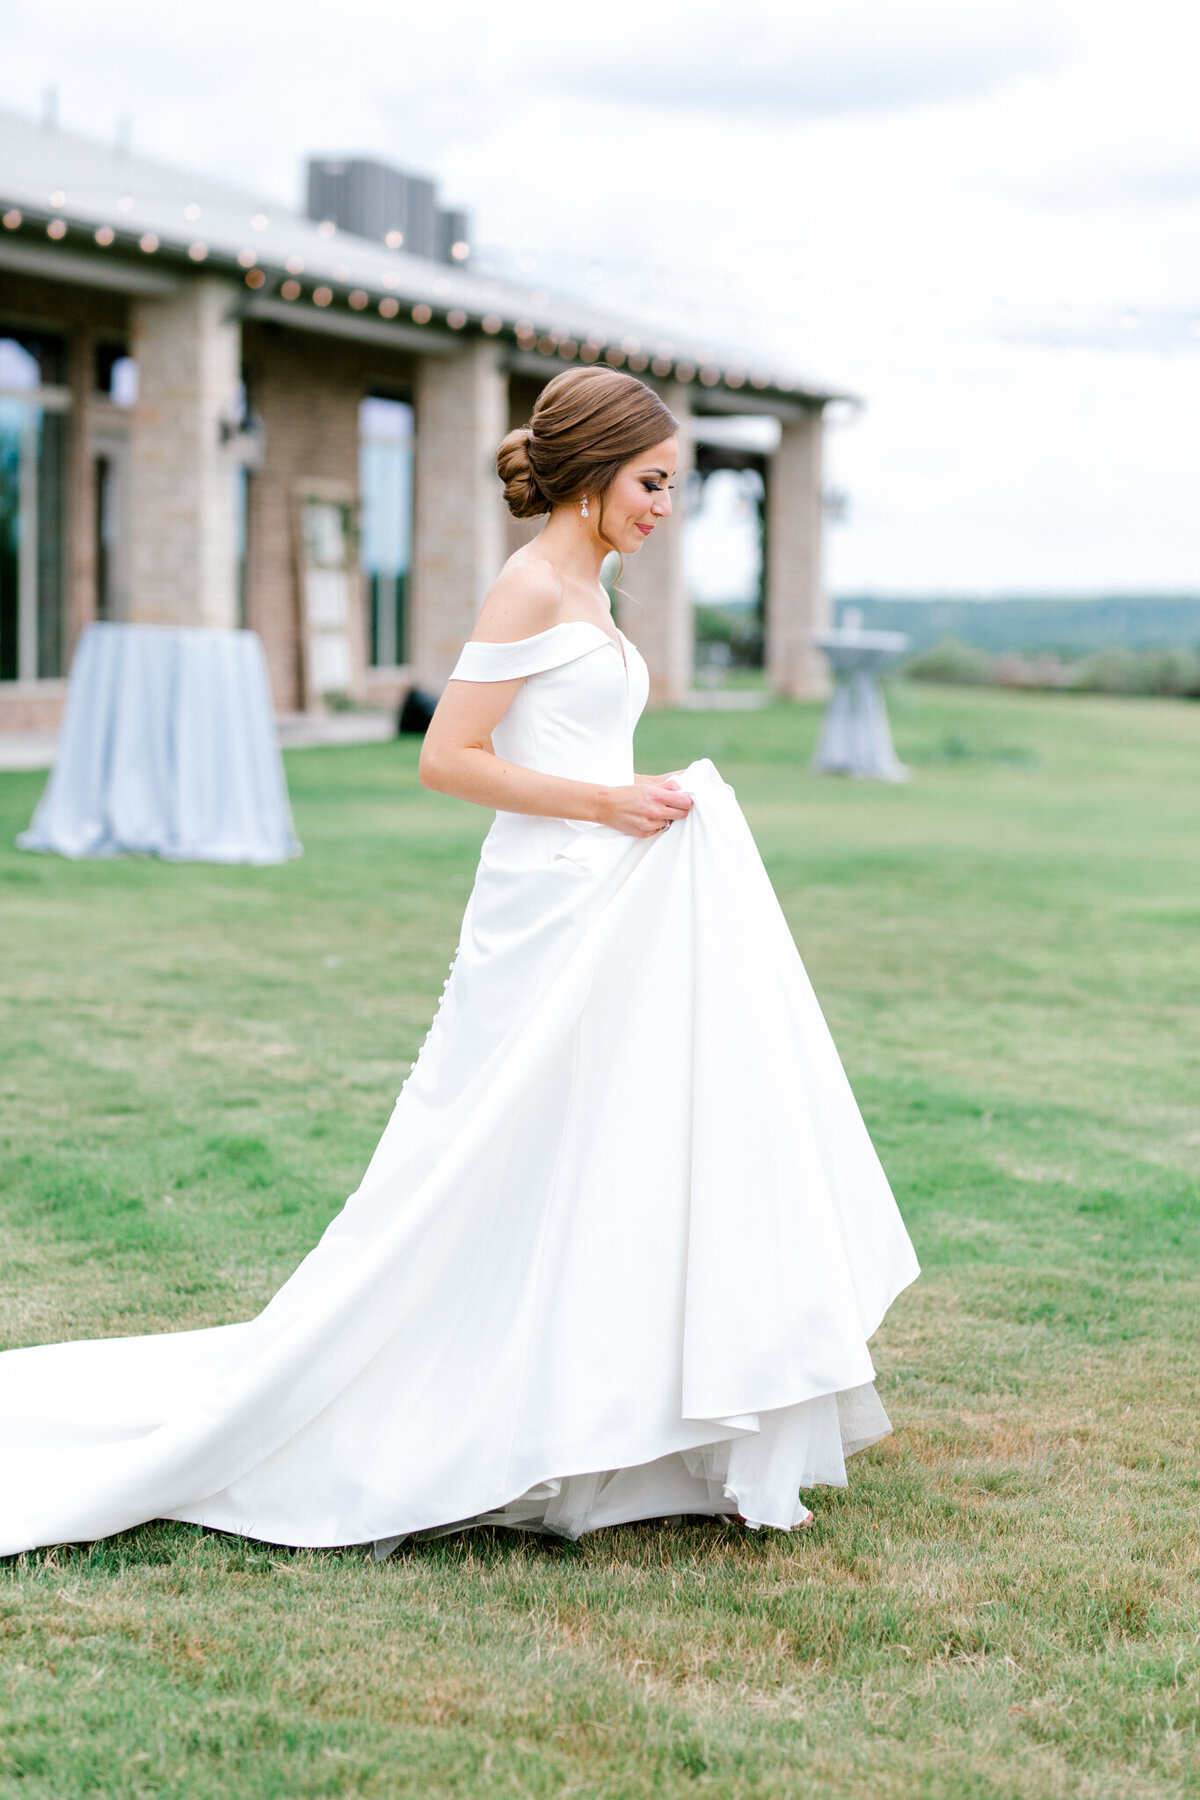 Lexi Broughton & Garrett Greer Wedding at Dove Ridge Vineyards | Sami Kathryn Photography | Dallas Wedding Photography-65